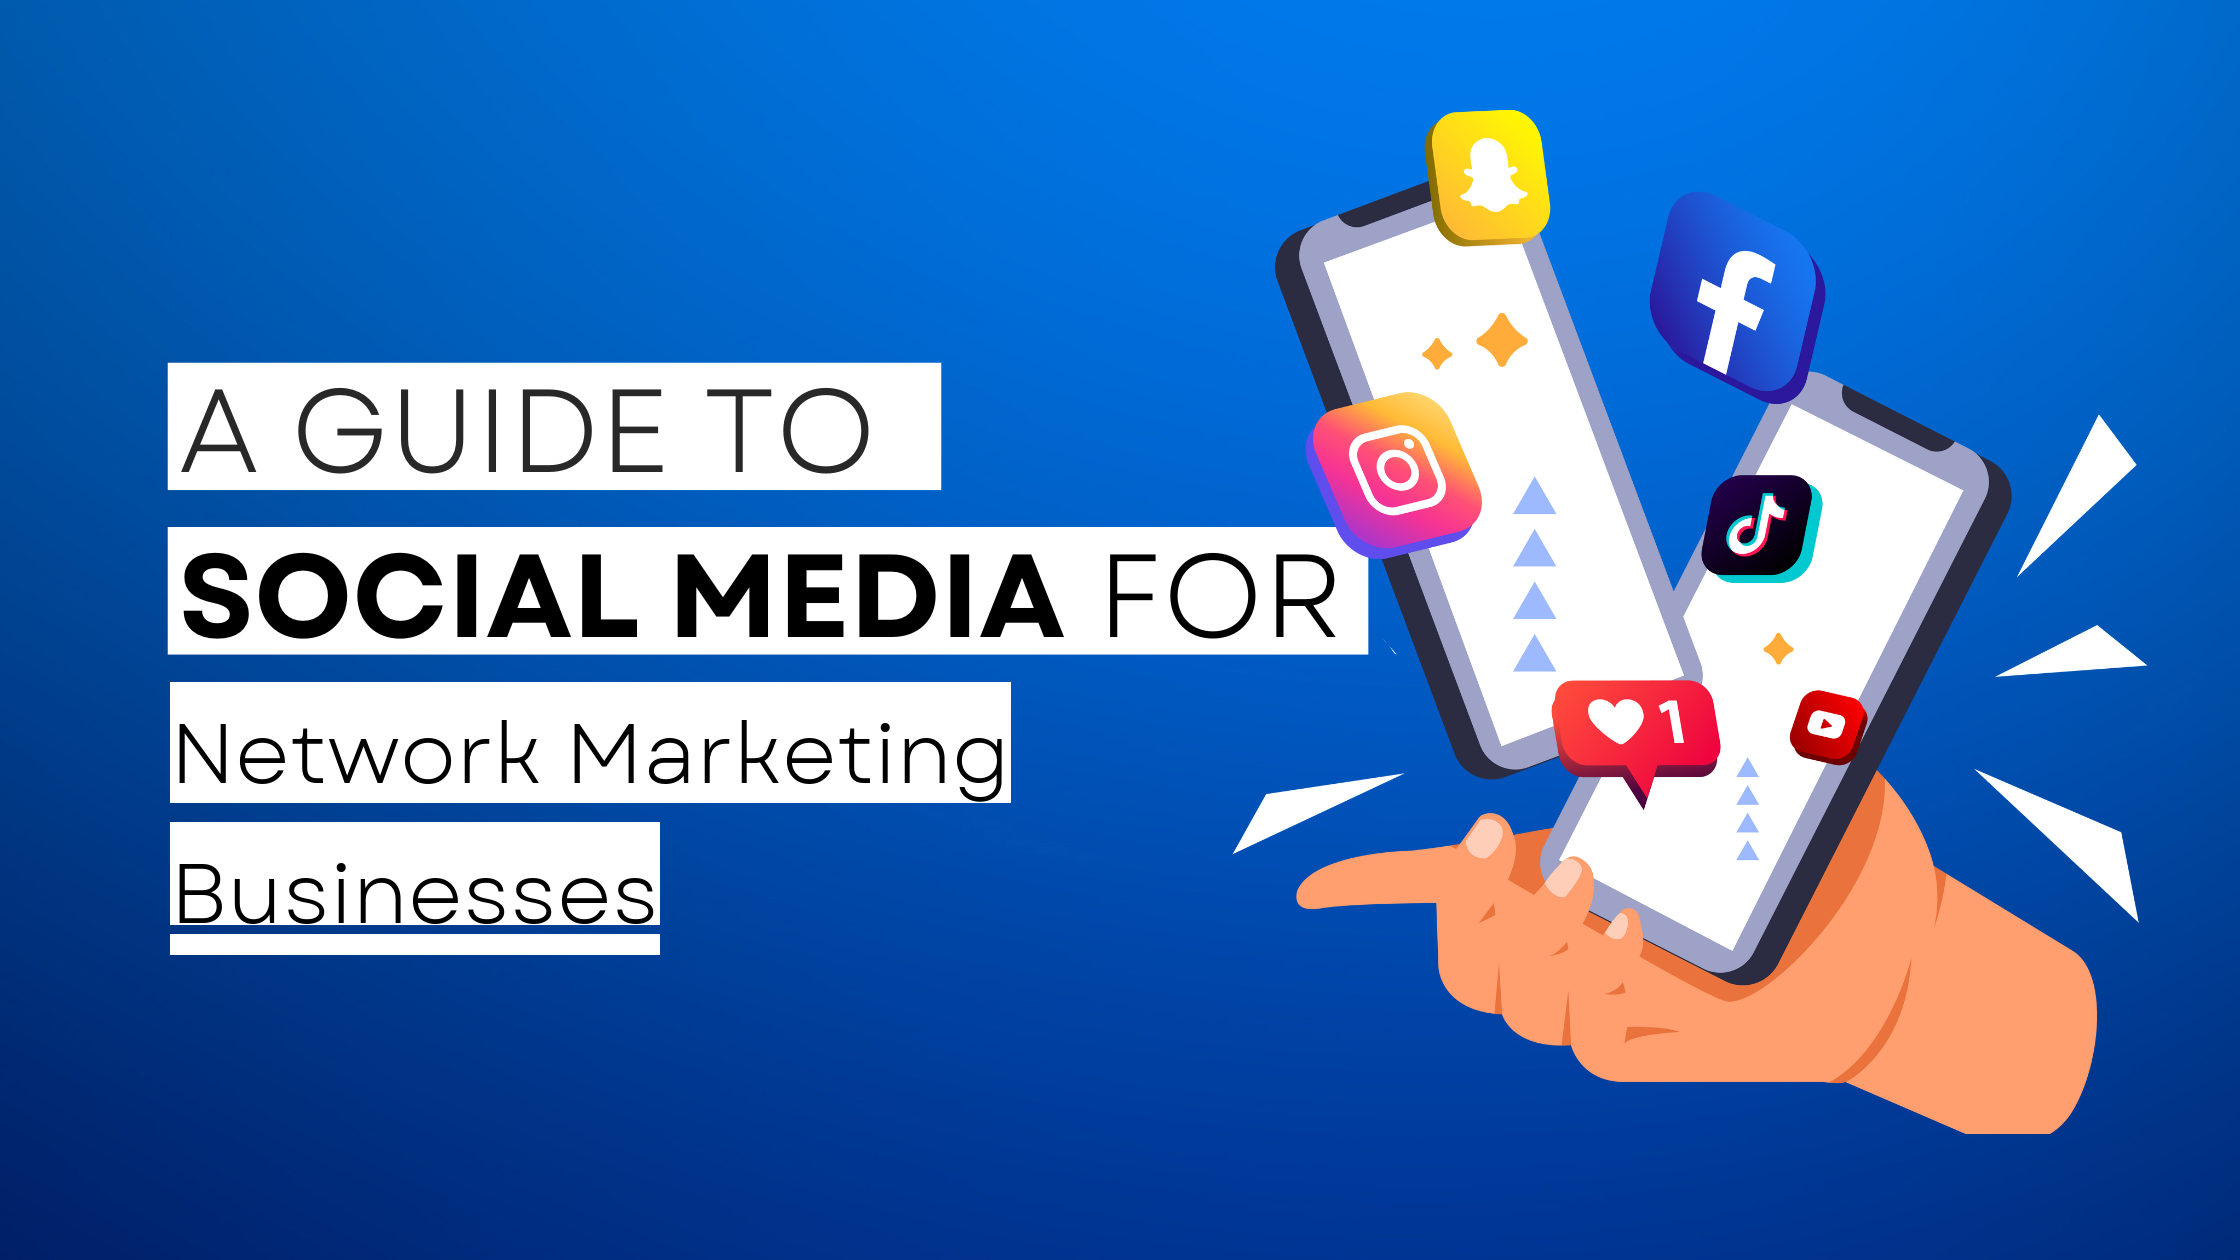 How to start Network Marketing on social media